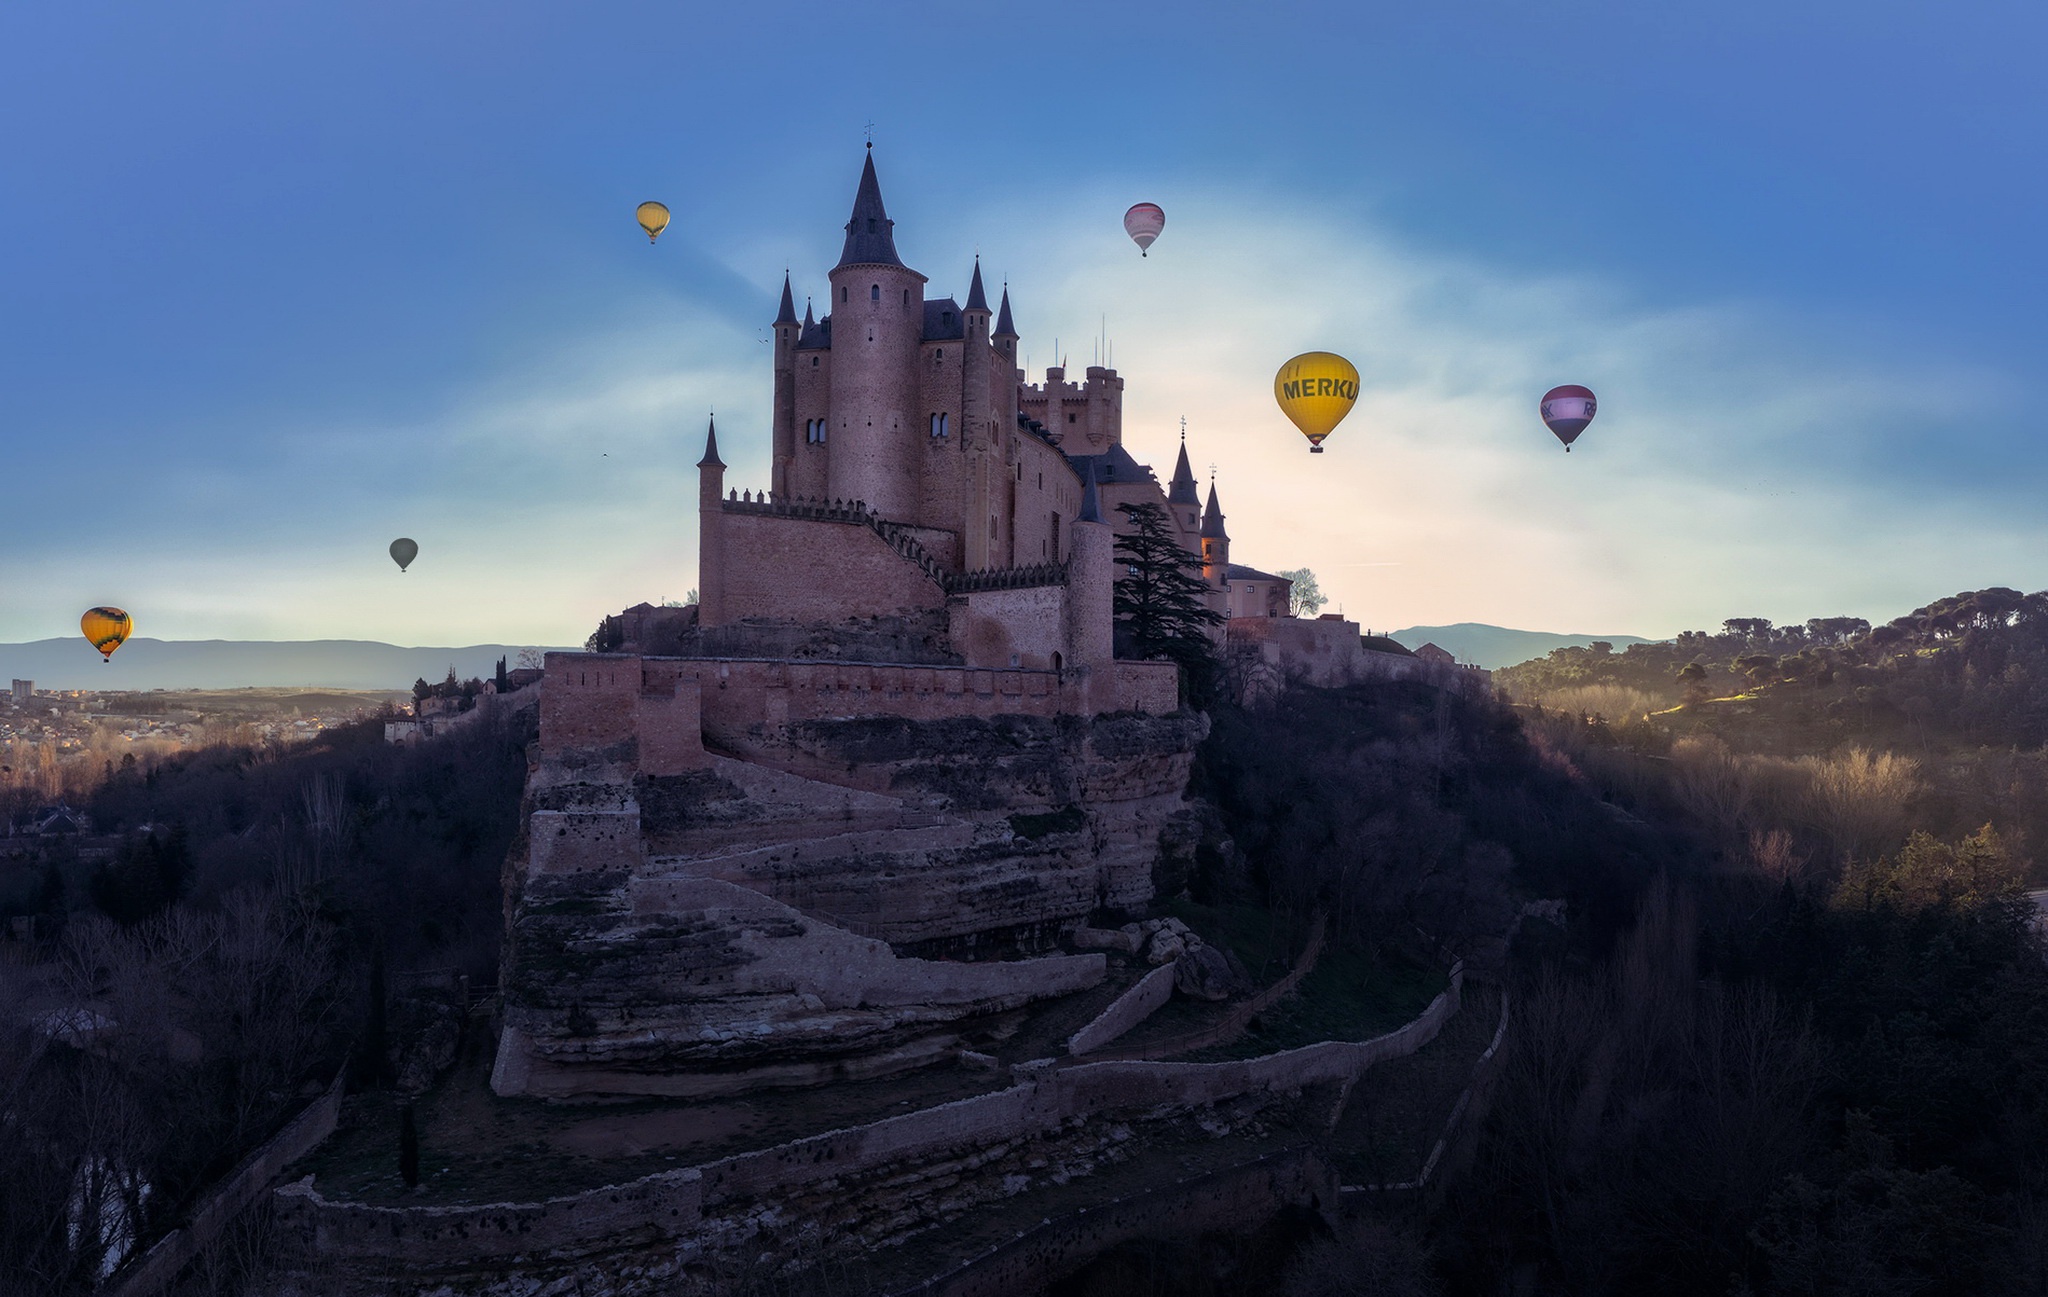 General 2048x1297 castle Spain sky hot air balloons Segovia Alcazar de Segovia